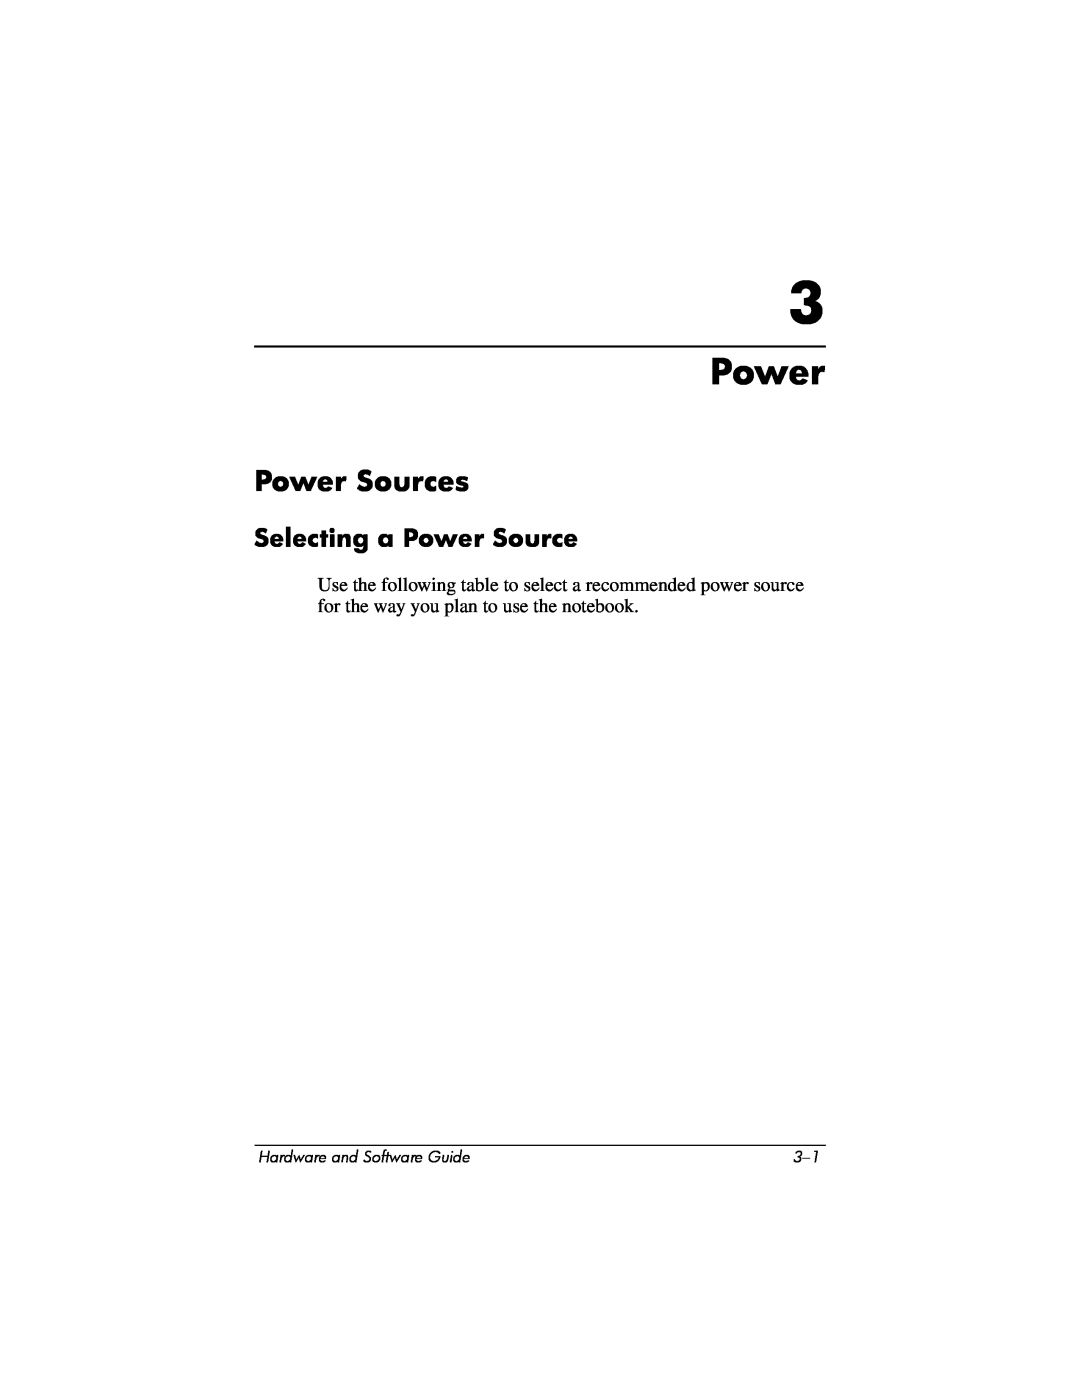 Compaq Presario M2000 manual Power Sources, Selecting a Power Source 